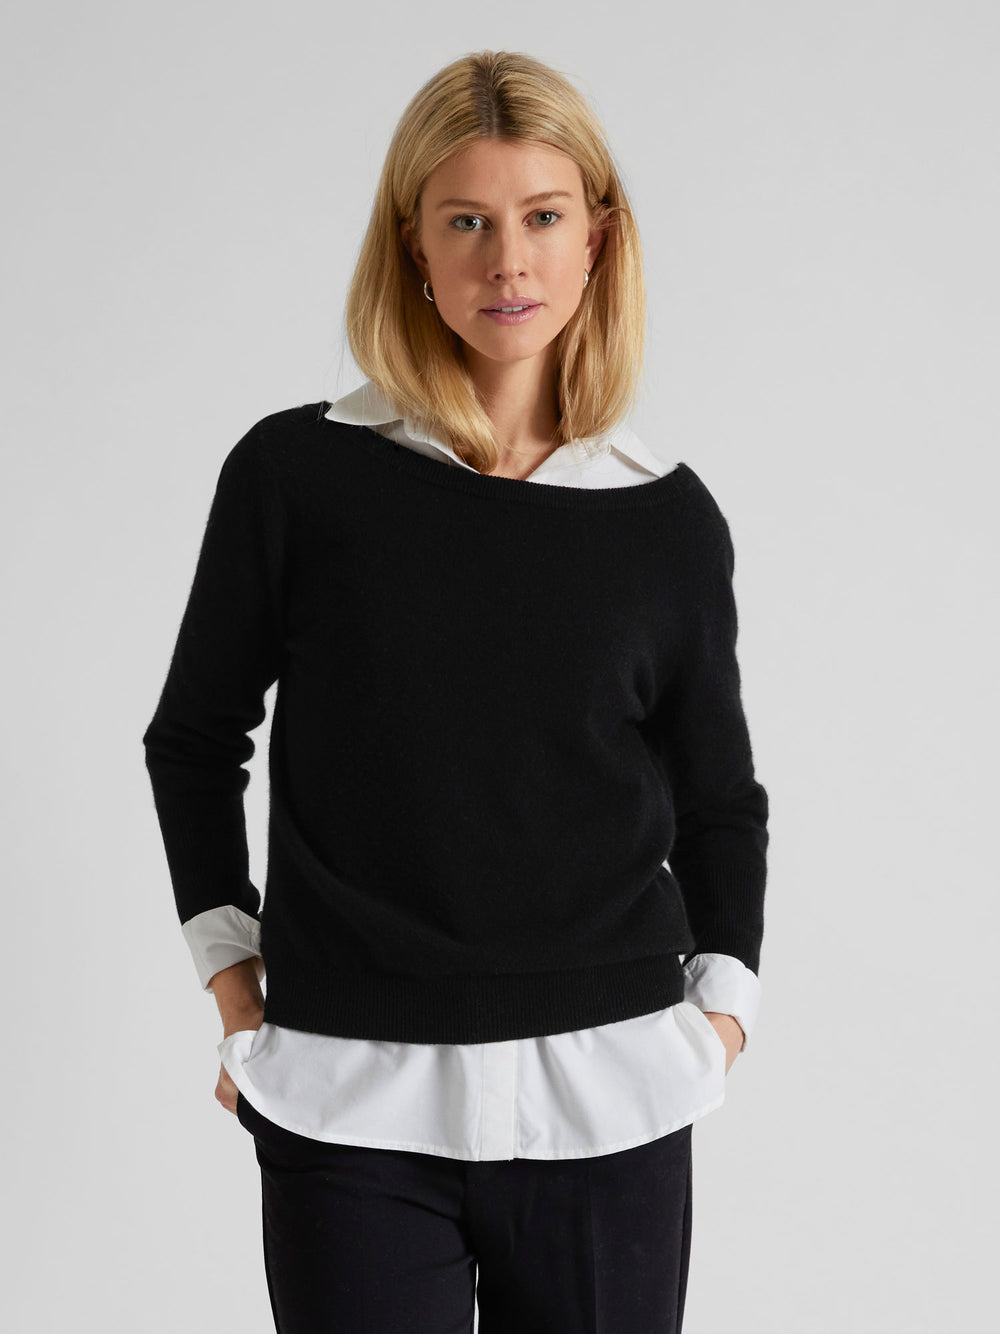 Cashmere sweater "Asta" in 100% pure cashmere. Scandinavian design by Kashmina. Color: Black.